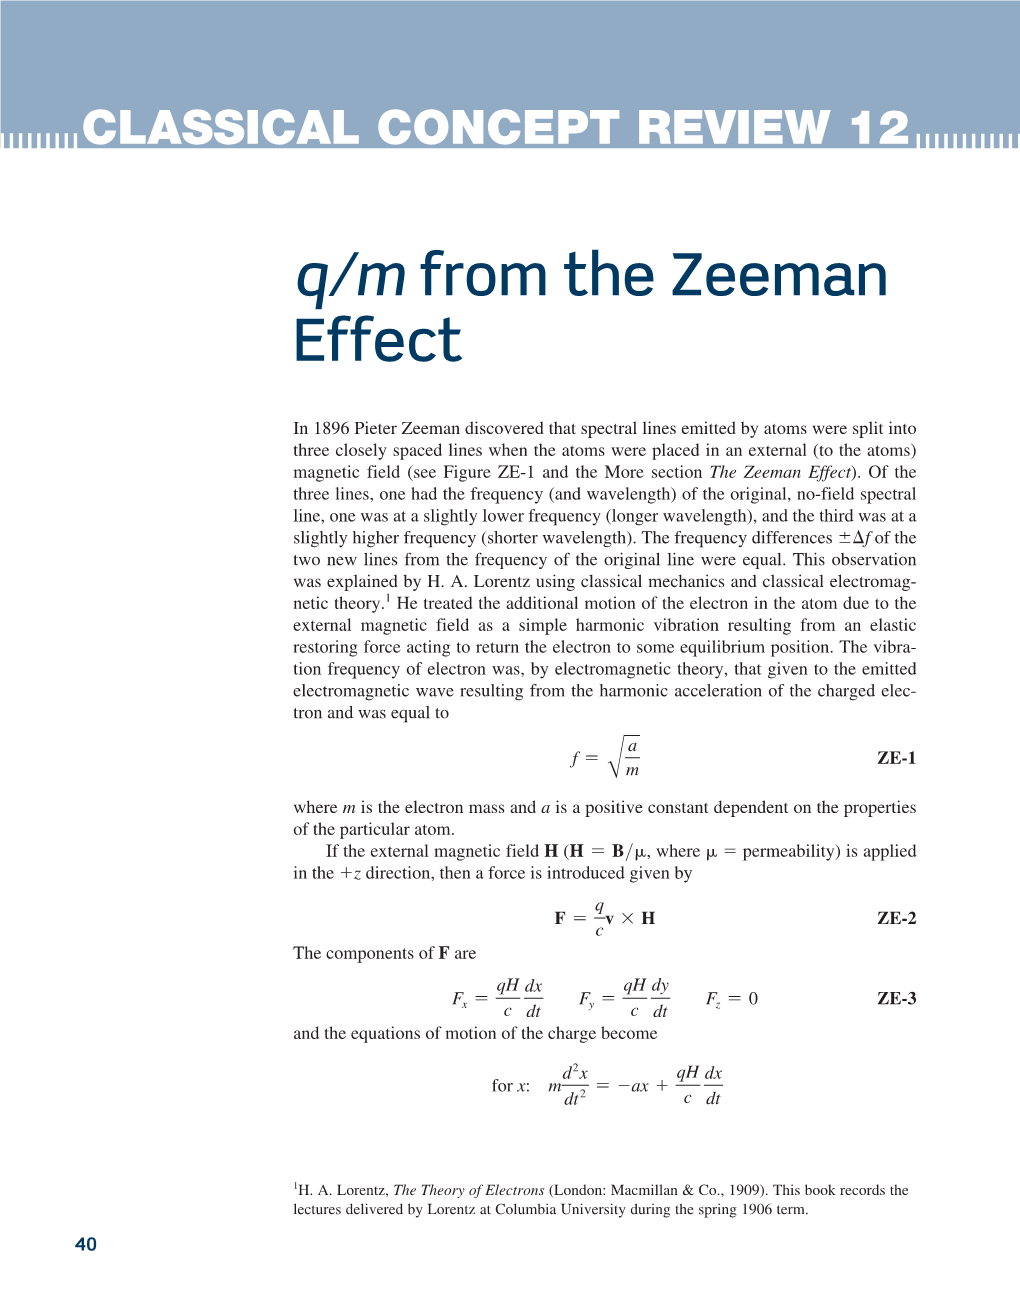 Q/M from the Zeeman Effect